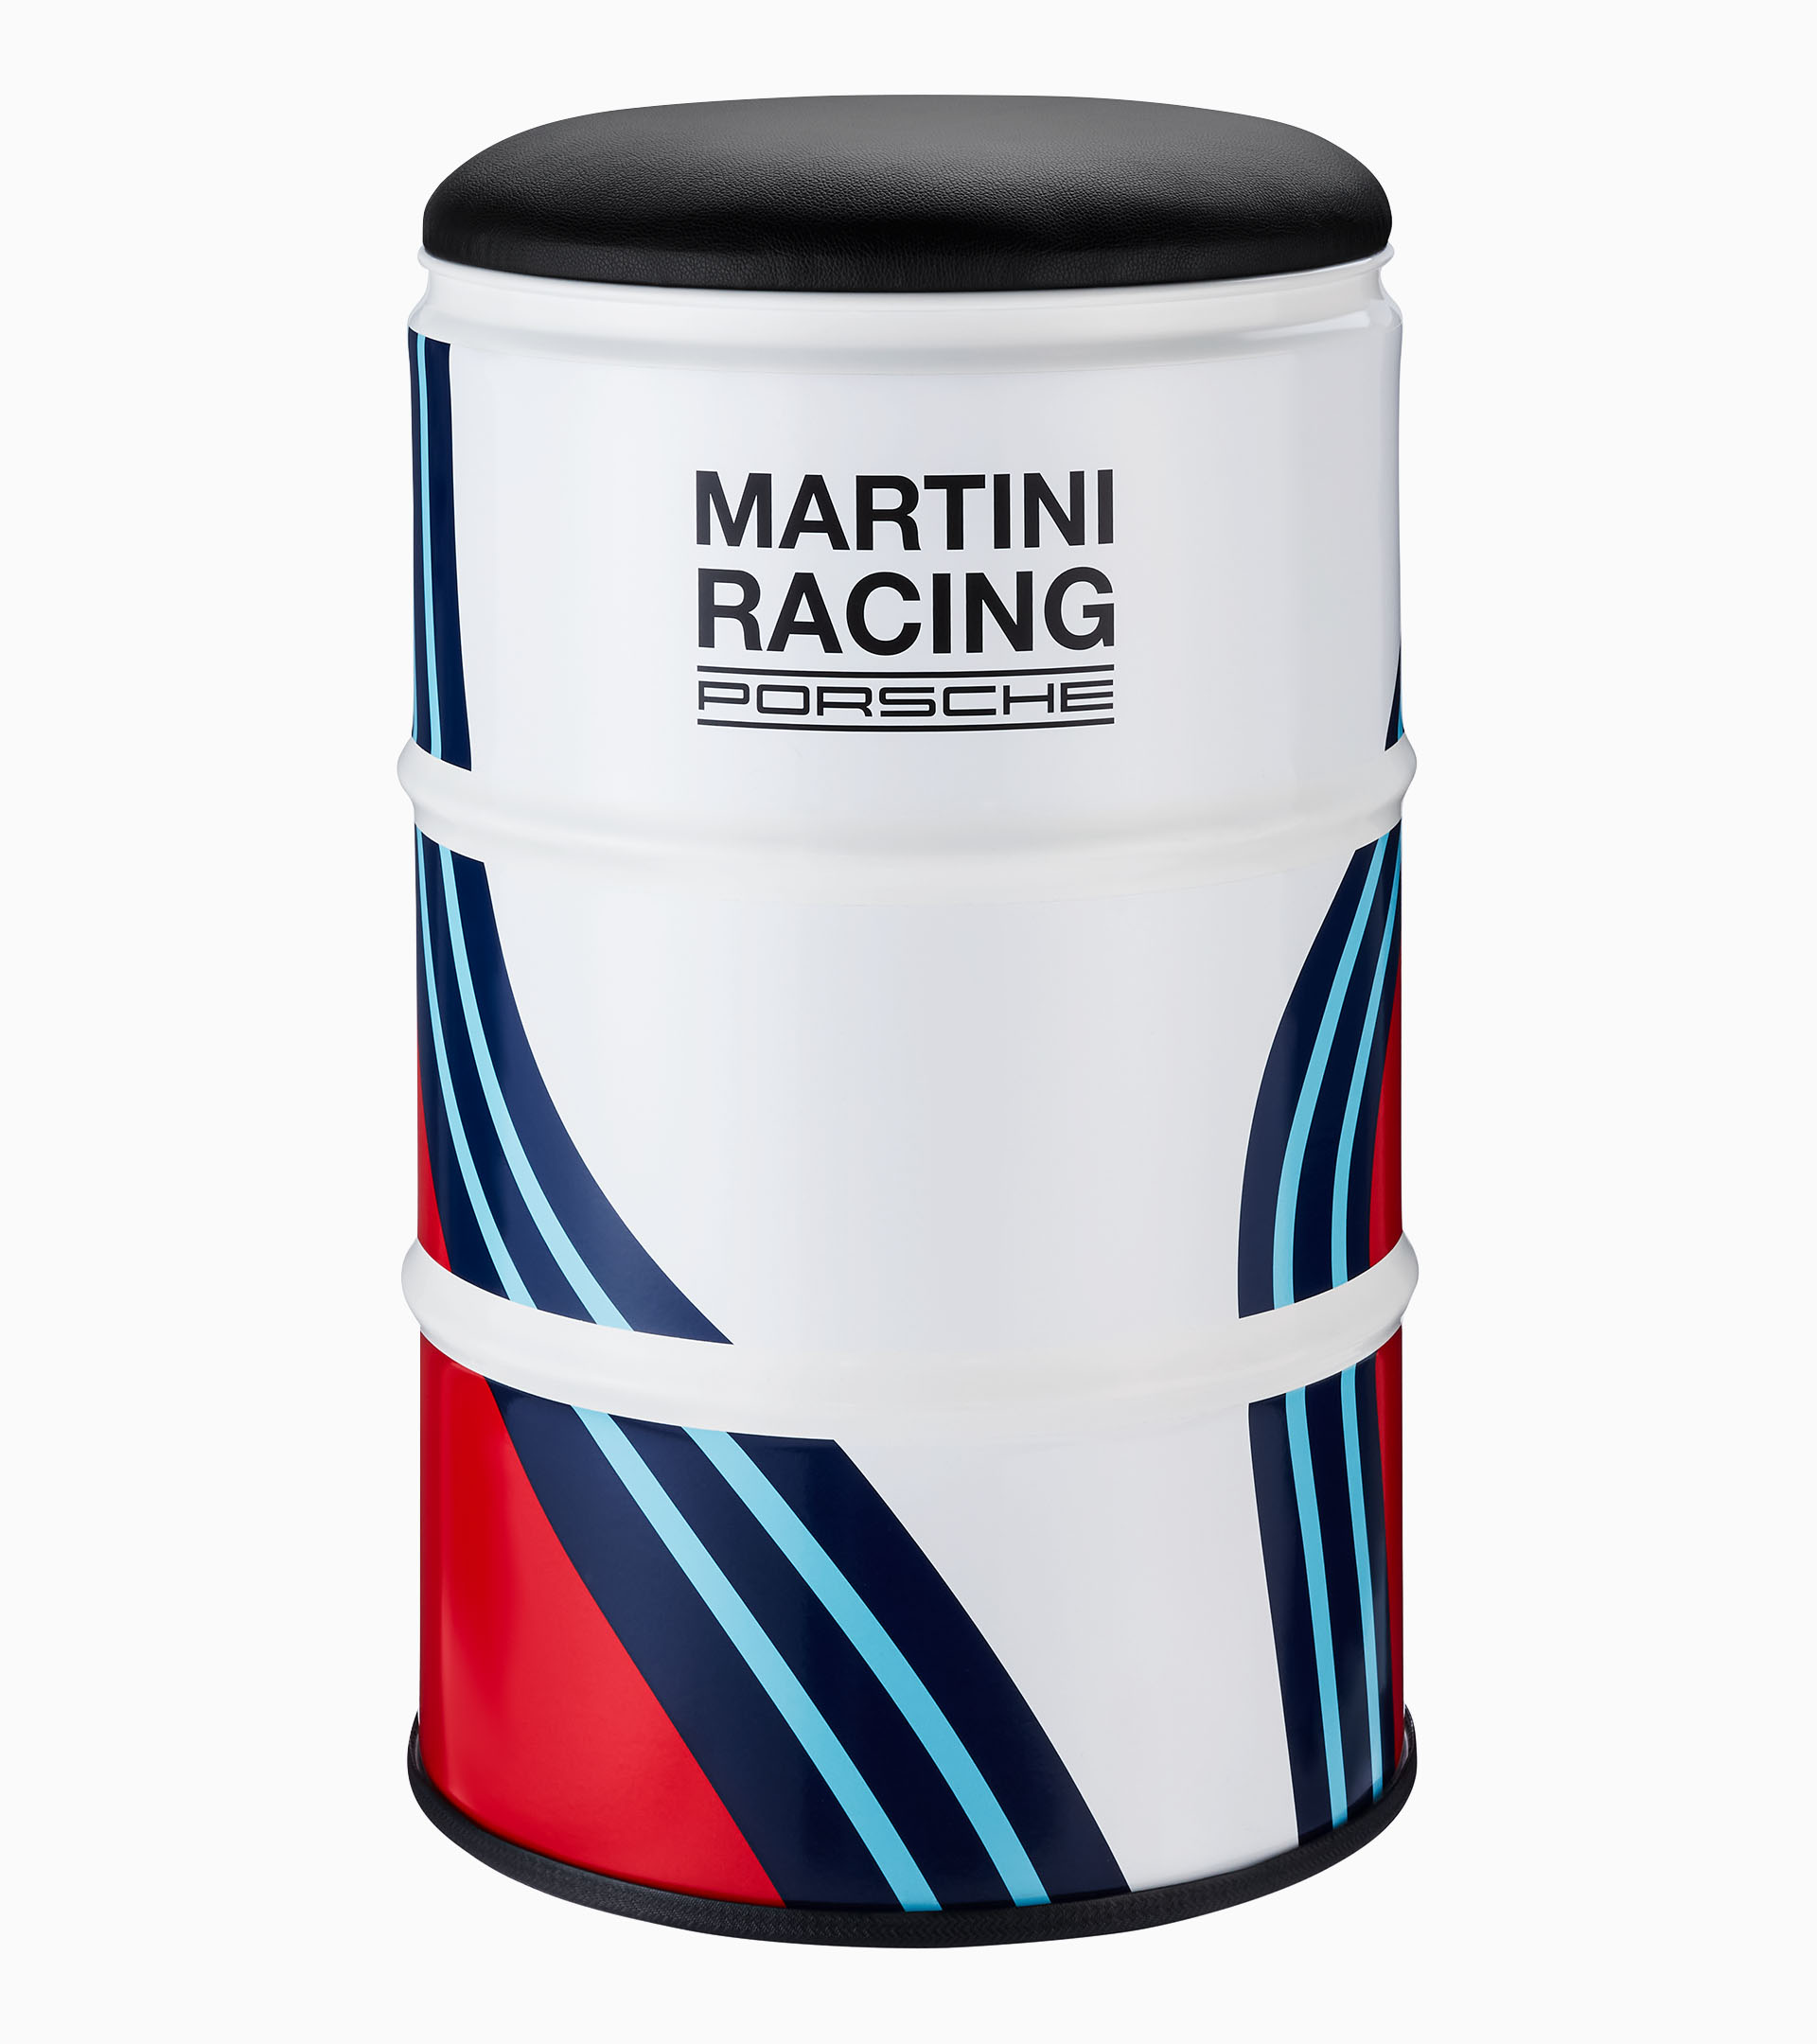 MARTINI RACING Barrel Seat zoom